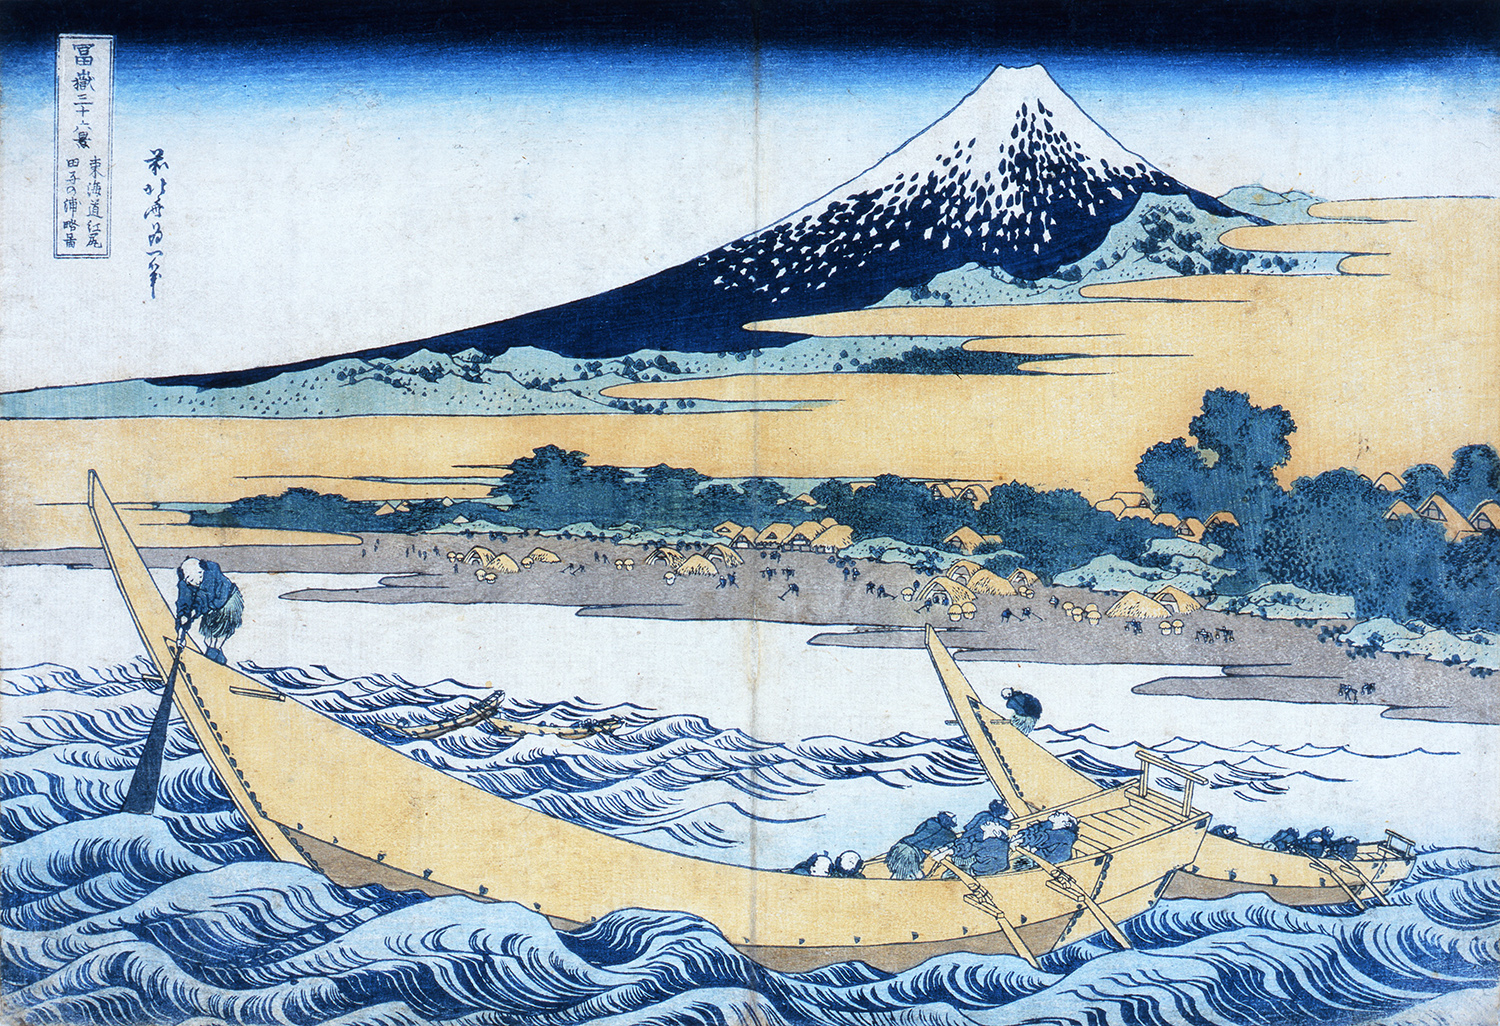 Katsushika Hokusai, Simplified View of Tagonoura Beach at Ejiri on the Tokaido Road, from the series Thirty-six Views of Mount Fuji, Sumida Hokusai Museum